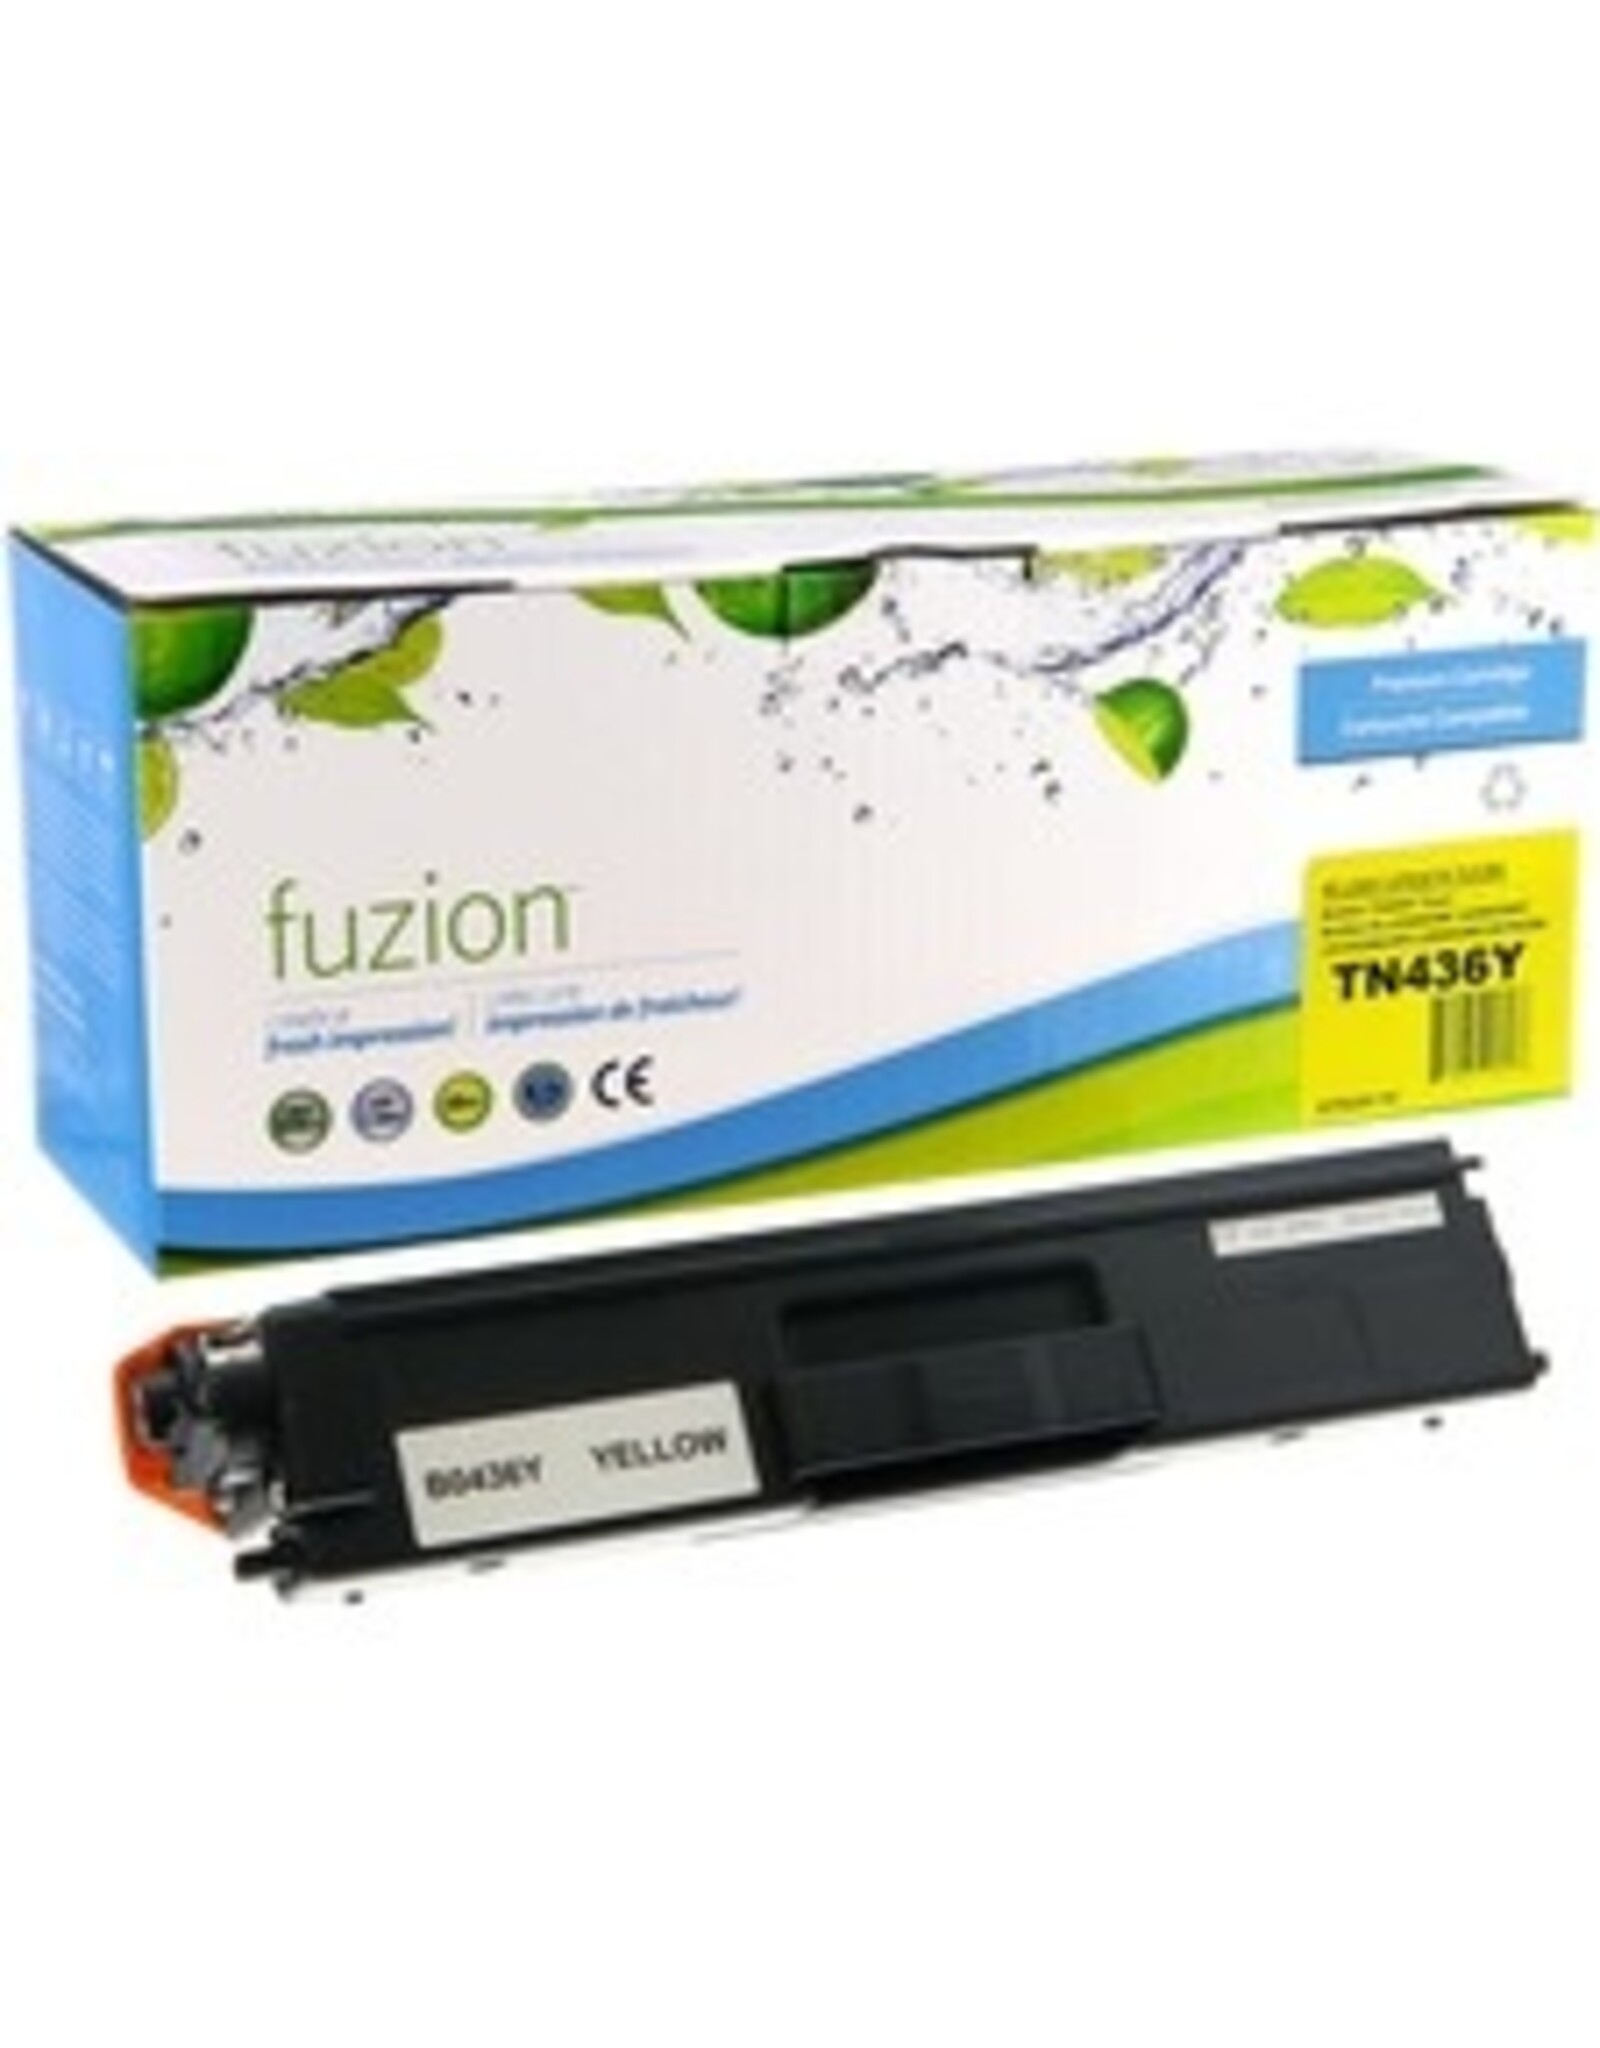 fuzion Toner Cartridge - Alternative for Brother TN436 - Yellow